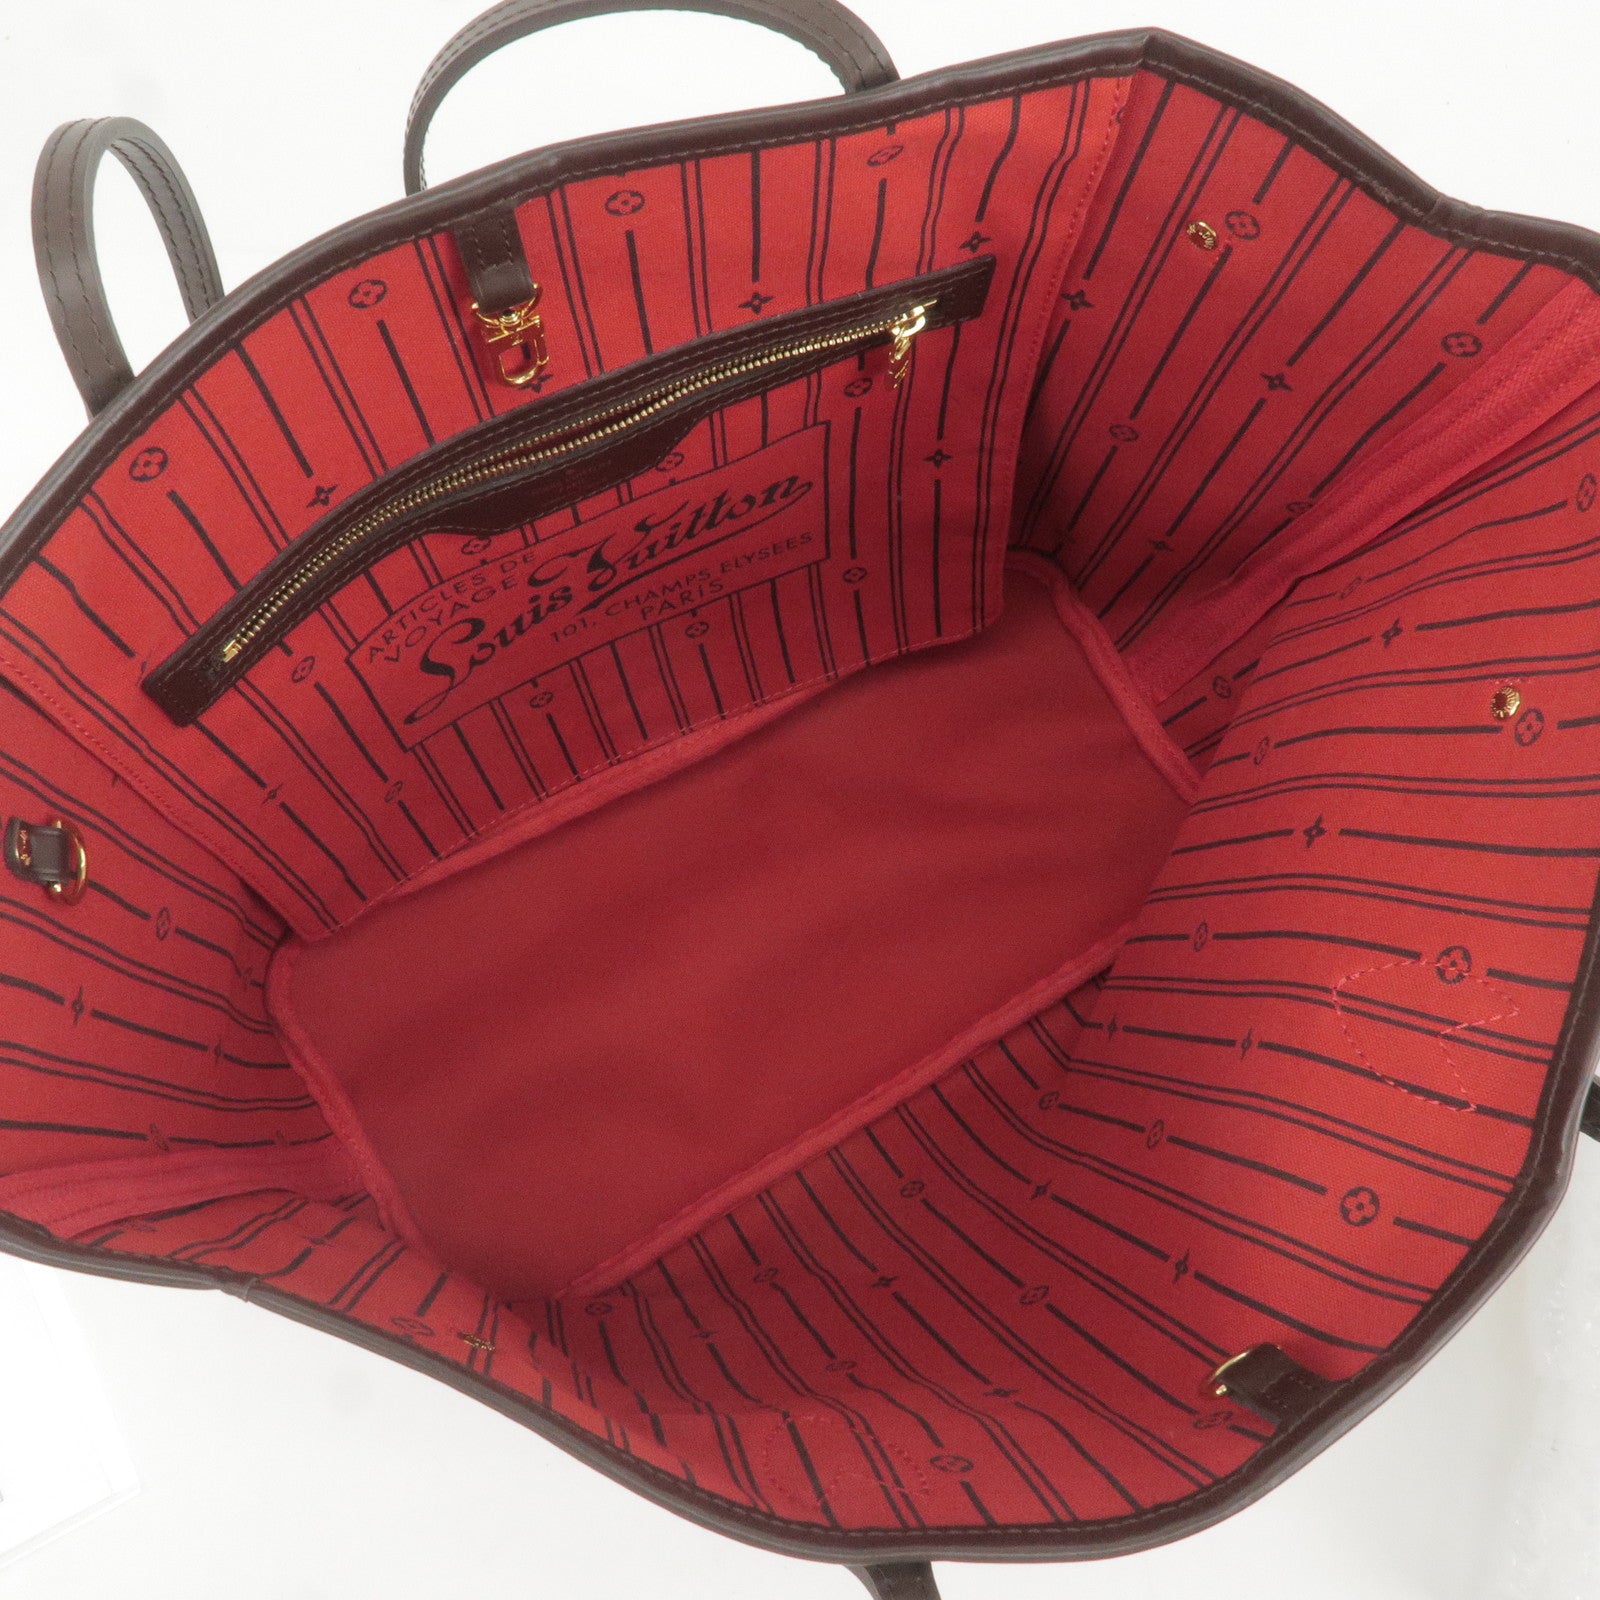 Louis-Vuitton-Damier-Neverfull-MM-Tote-Bag-Hand-Bag-N51105 – dct